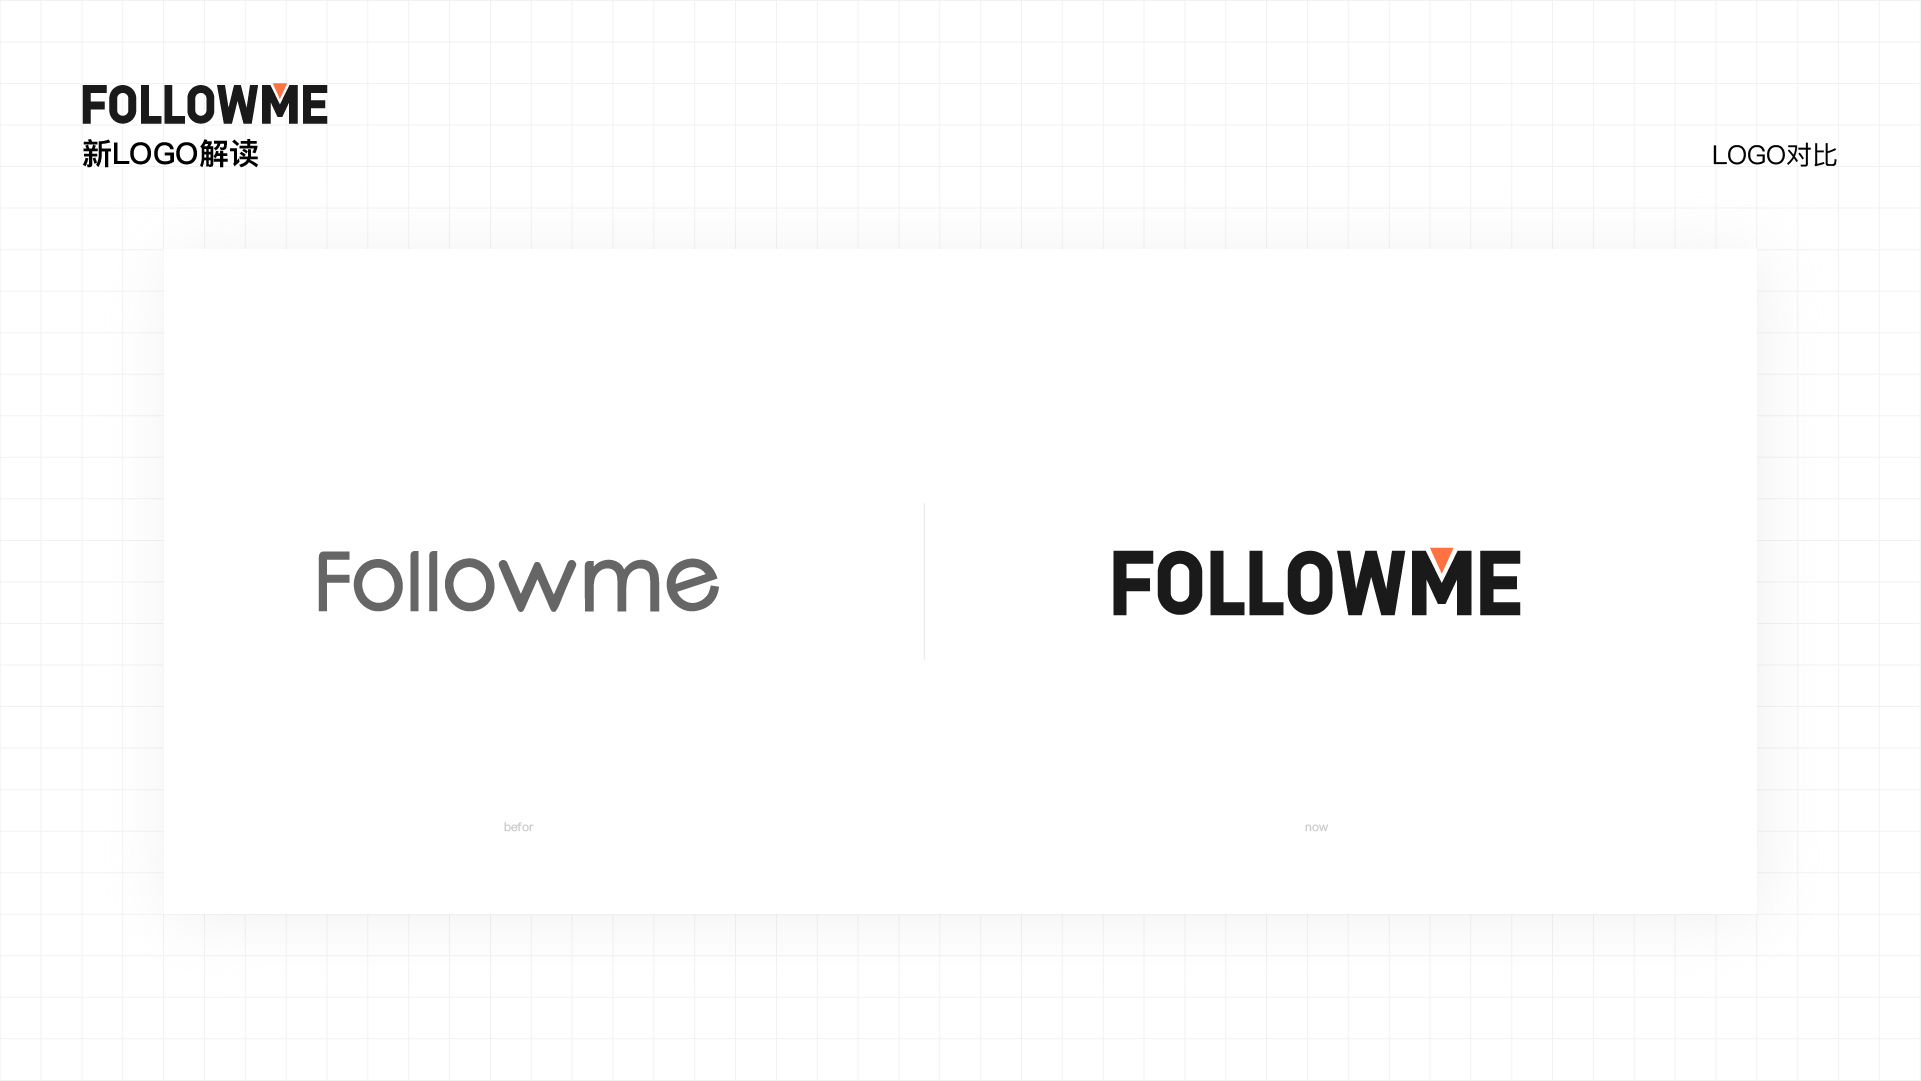 FOLLOWME 启动全球品牌形象升级，从新出发迎战全球化